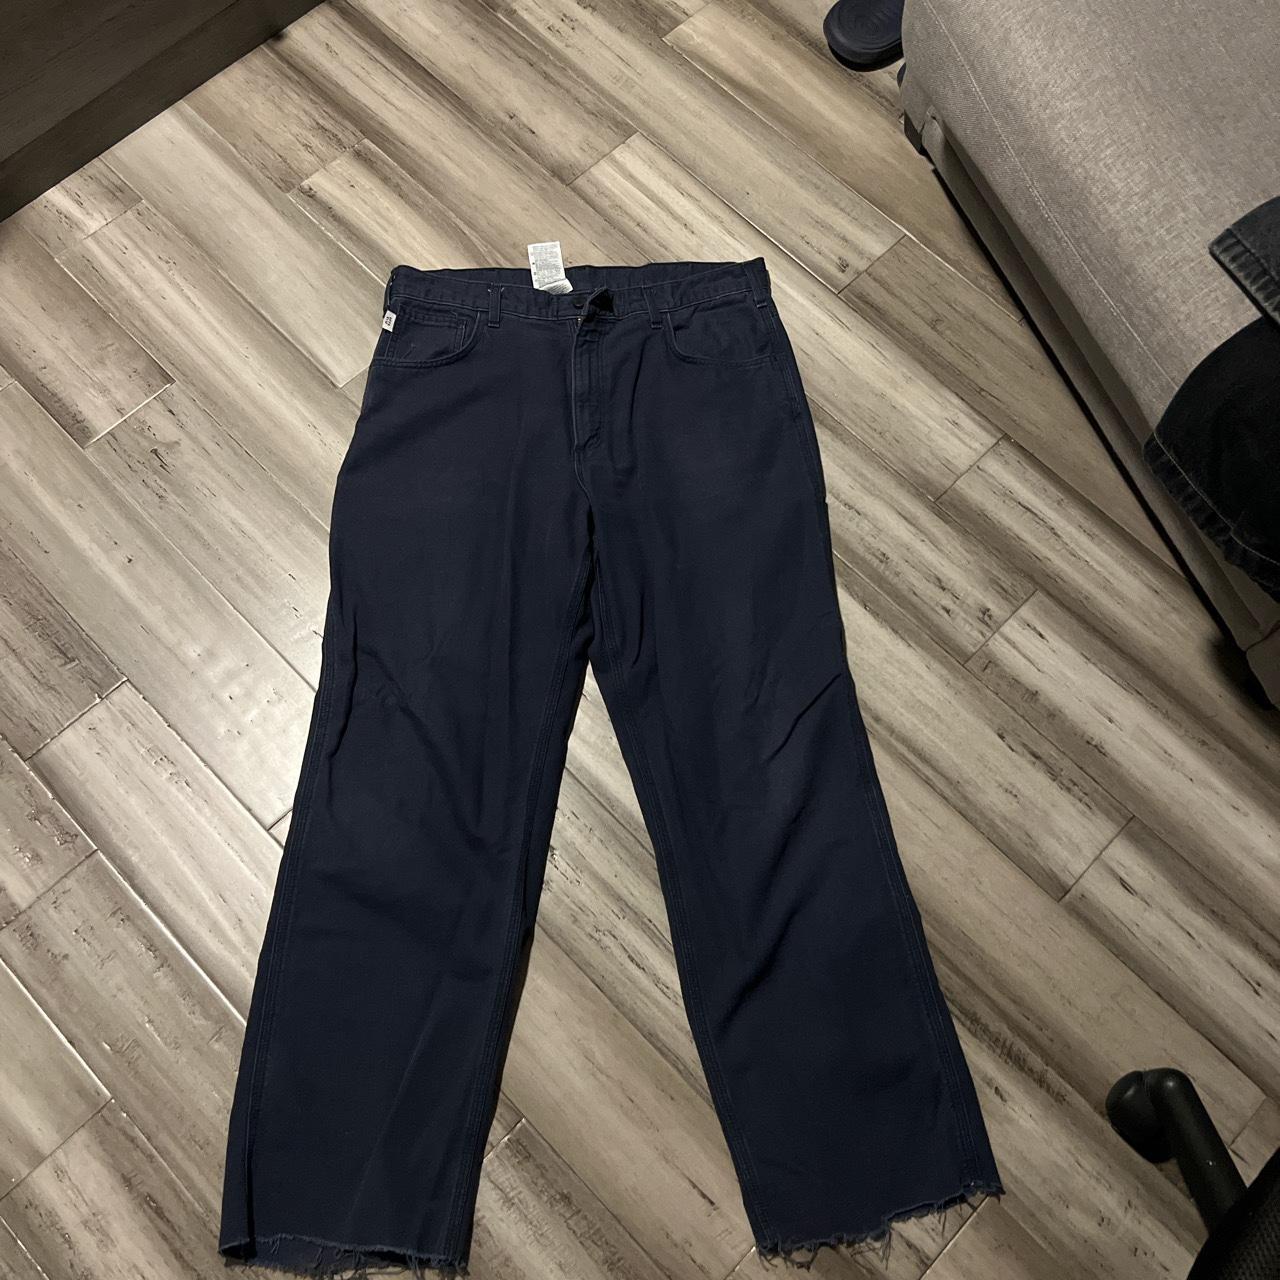 Vintage Navy blue carhartt pants size 36x32 but cut... - Depop